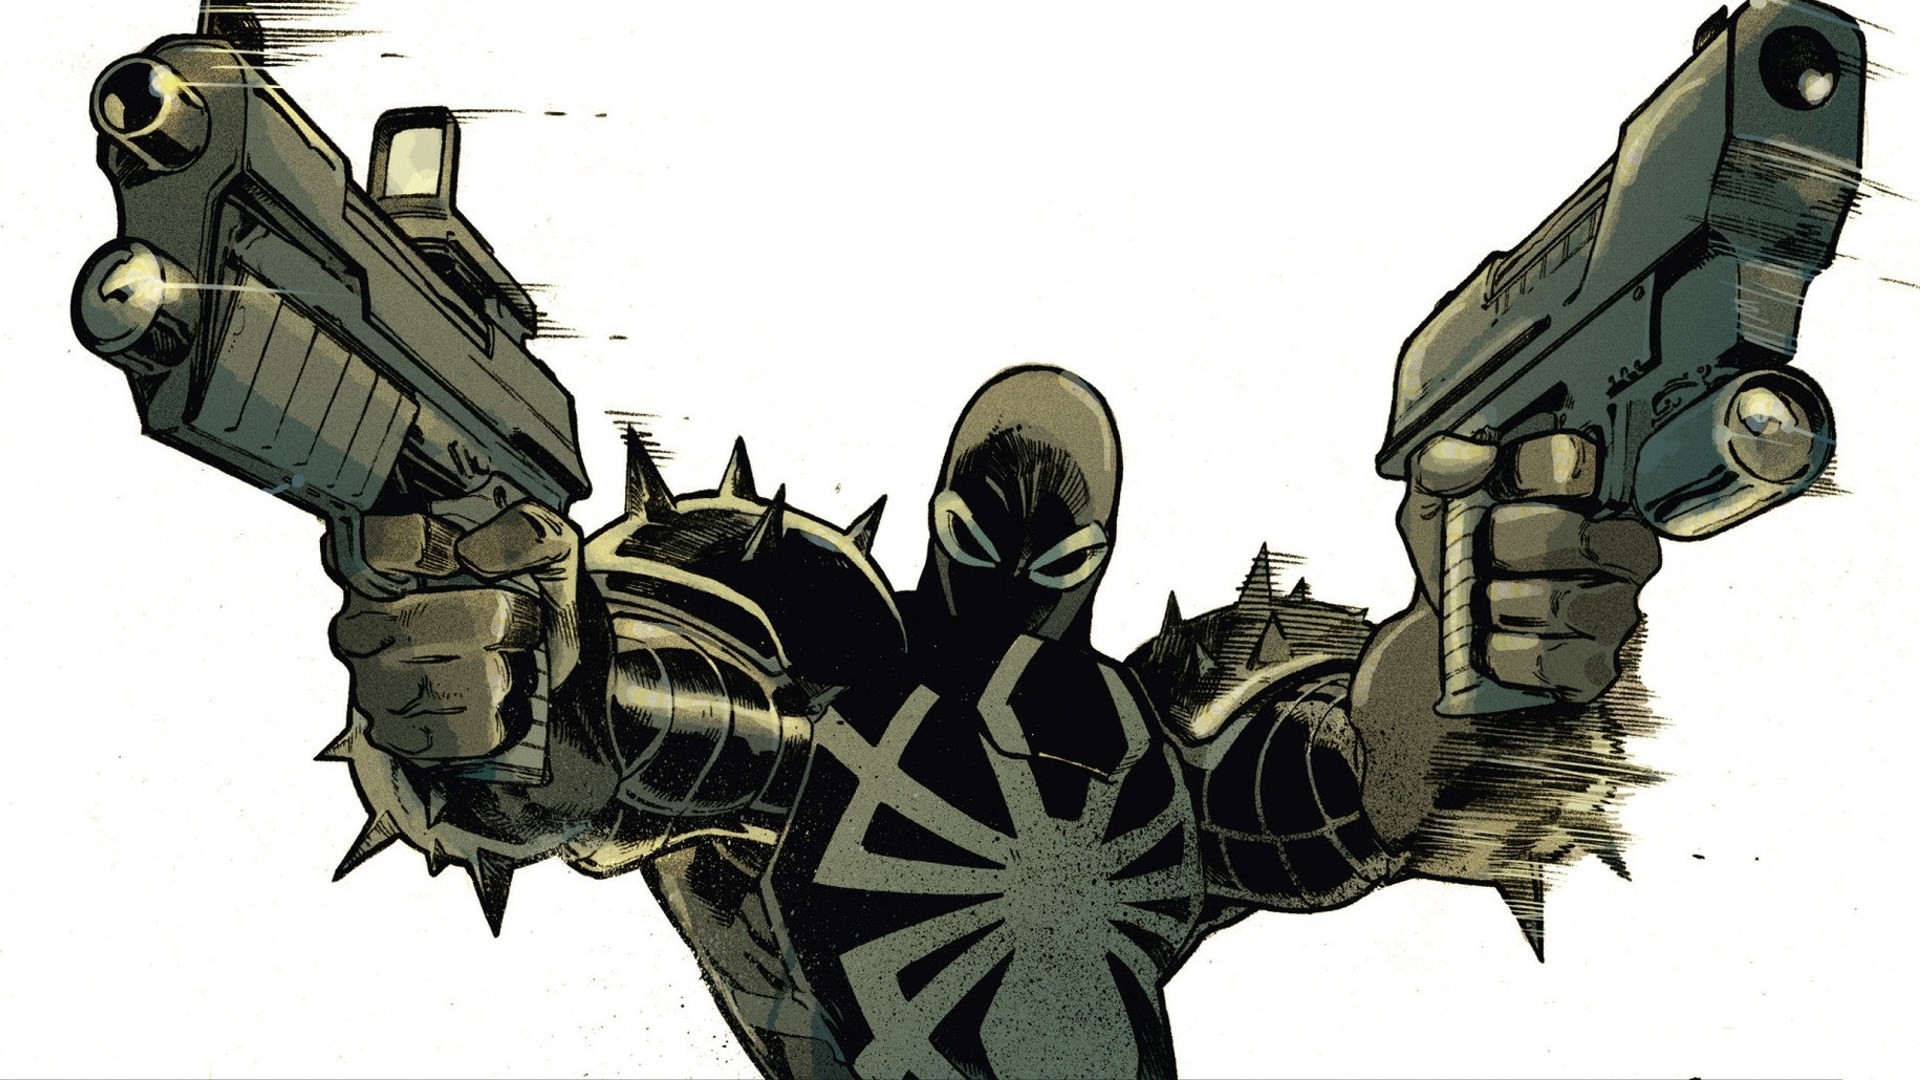 agent venom wallpaper,fictional character,superhero,action adventure game,fiction,illustration